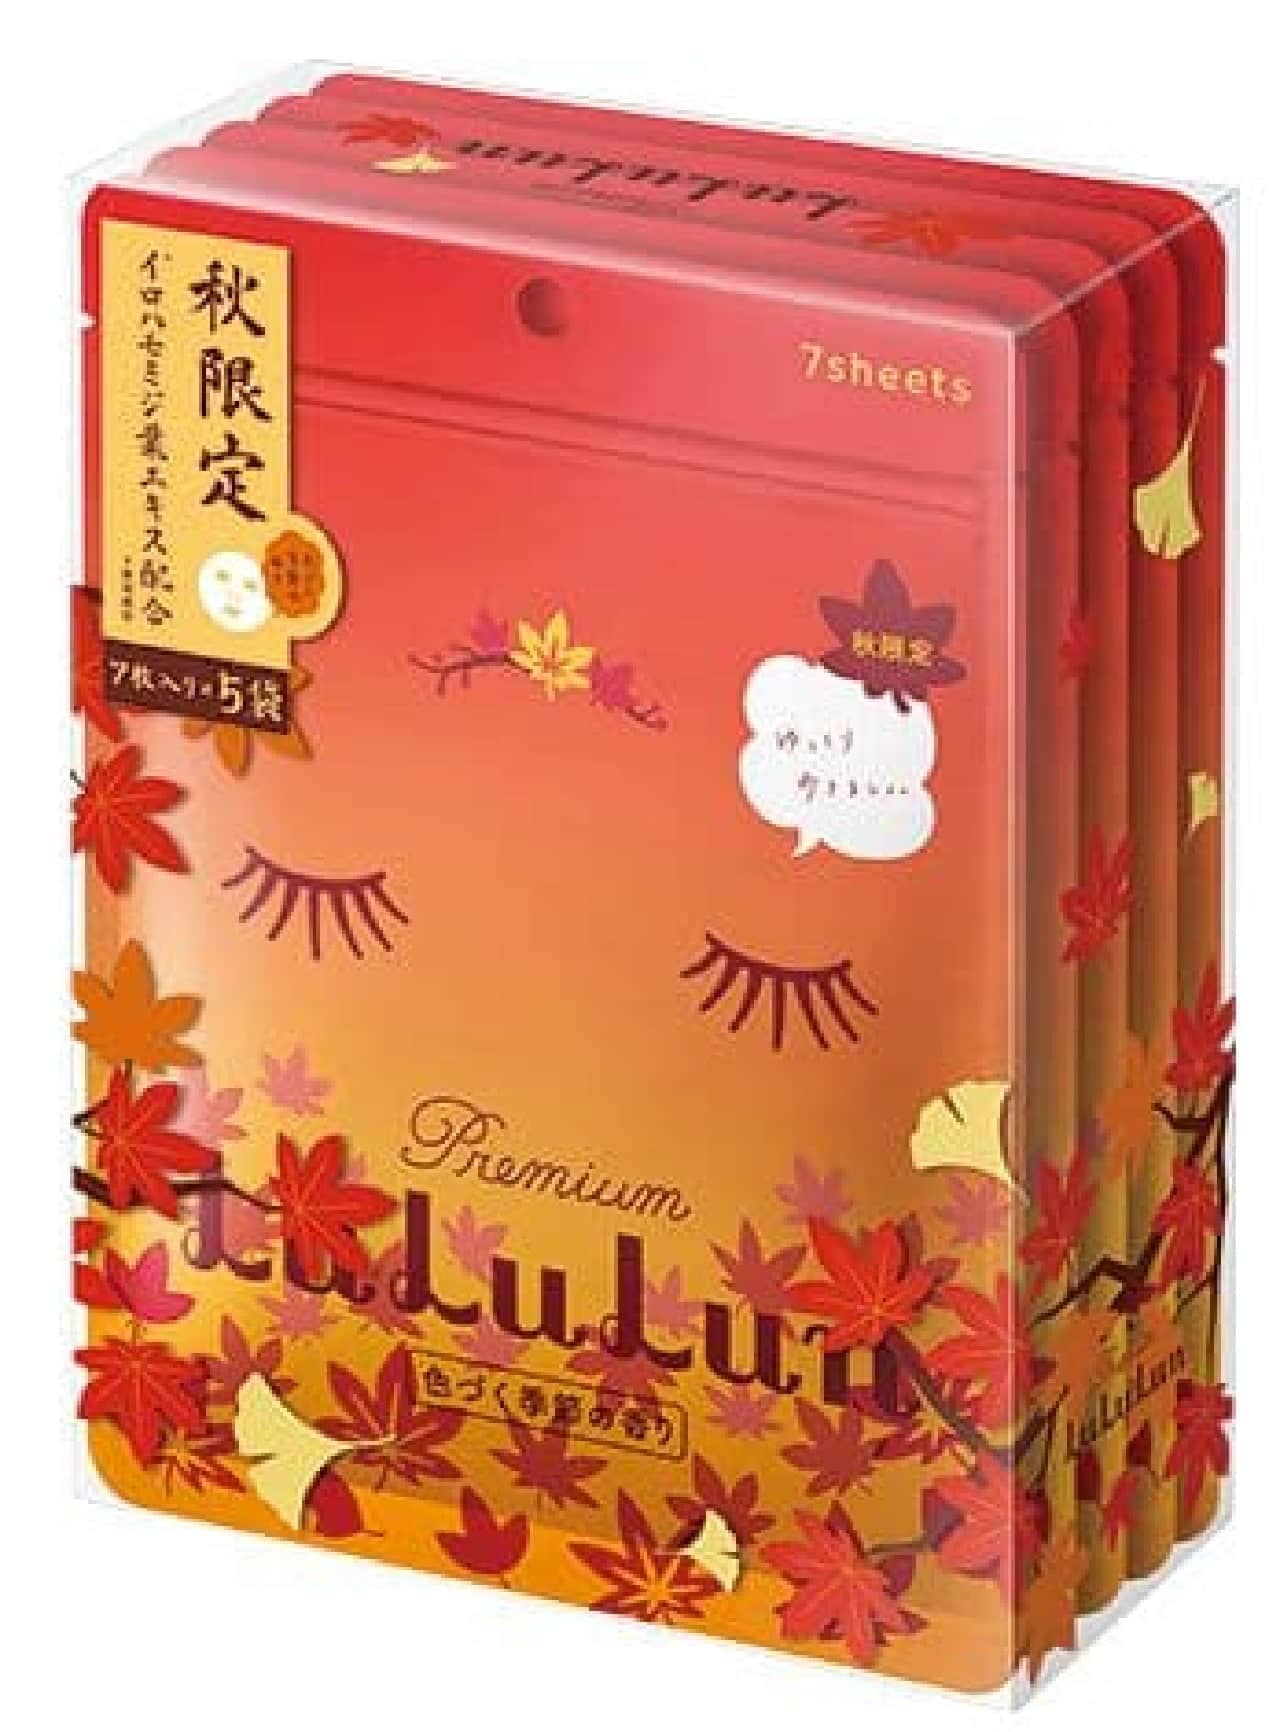 Autumn limited premium Lulurun maple (colored seasonal scent)